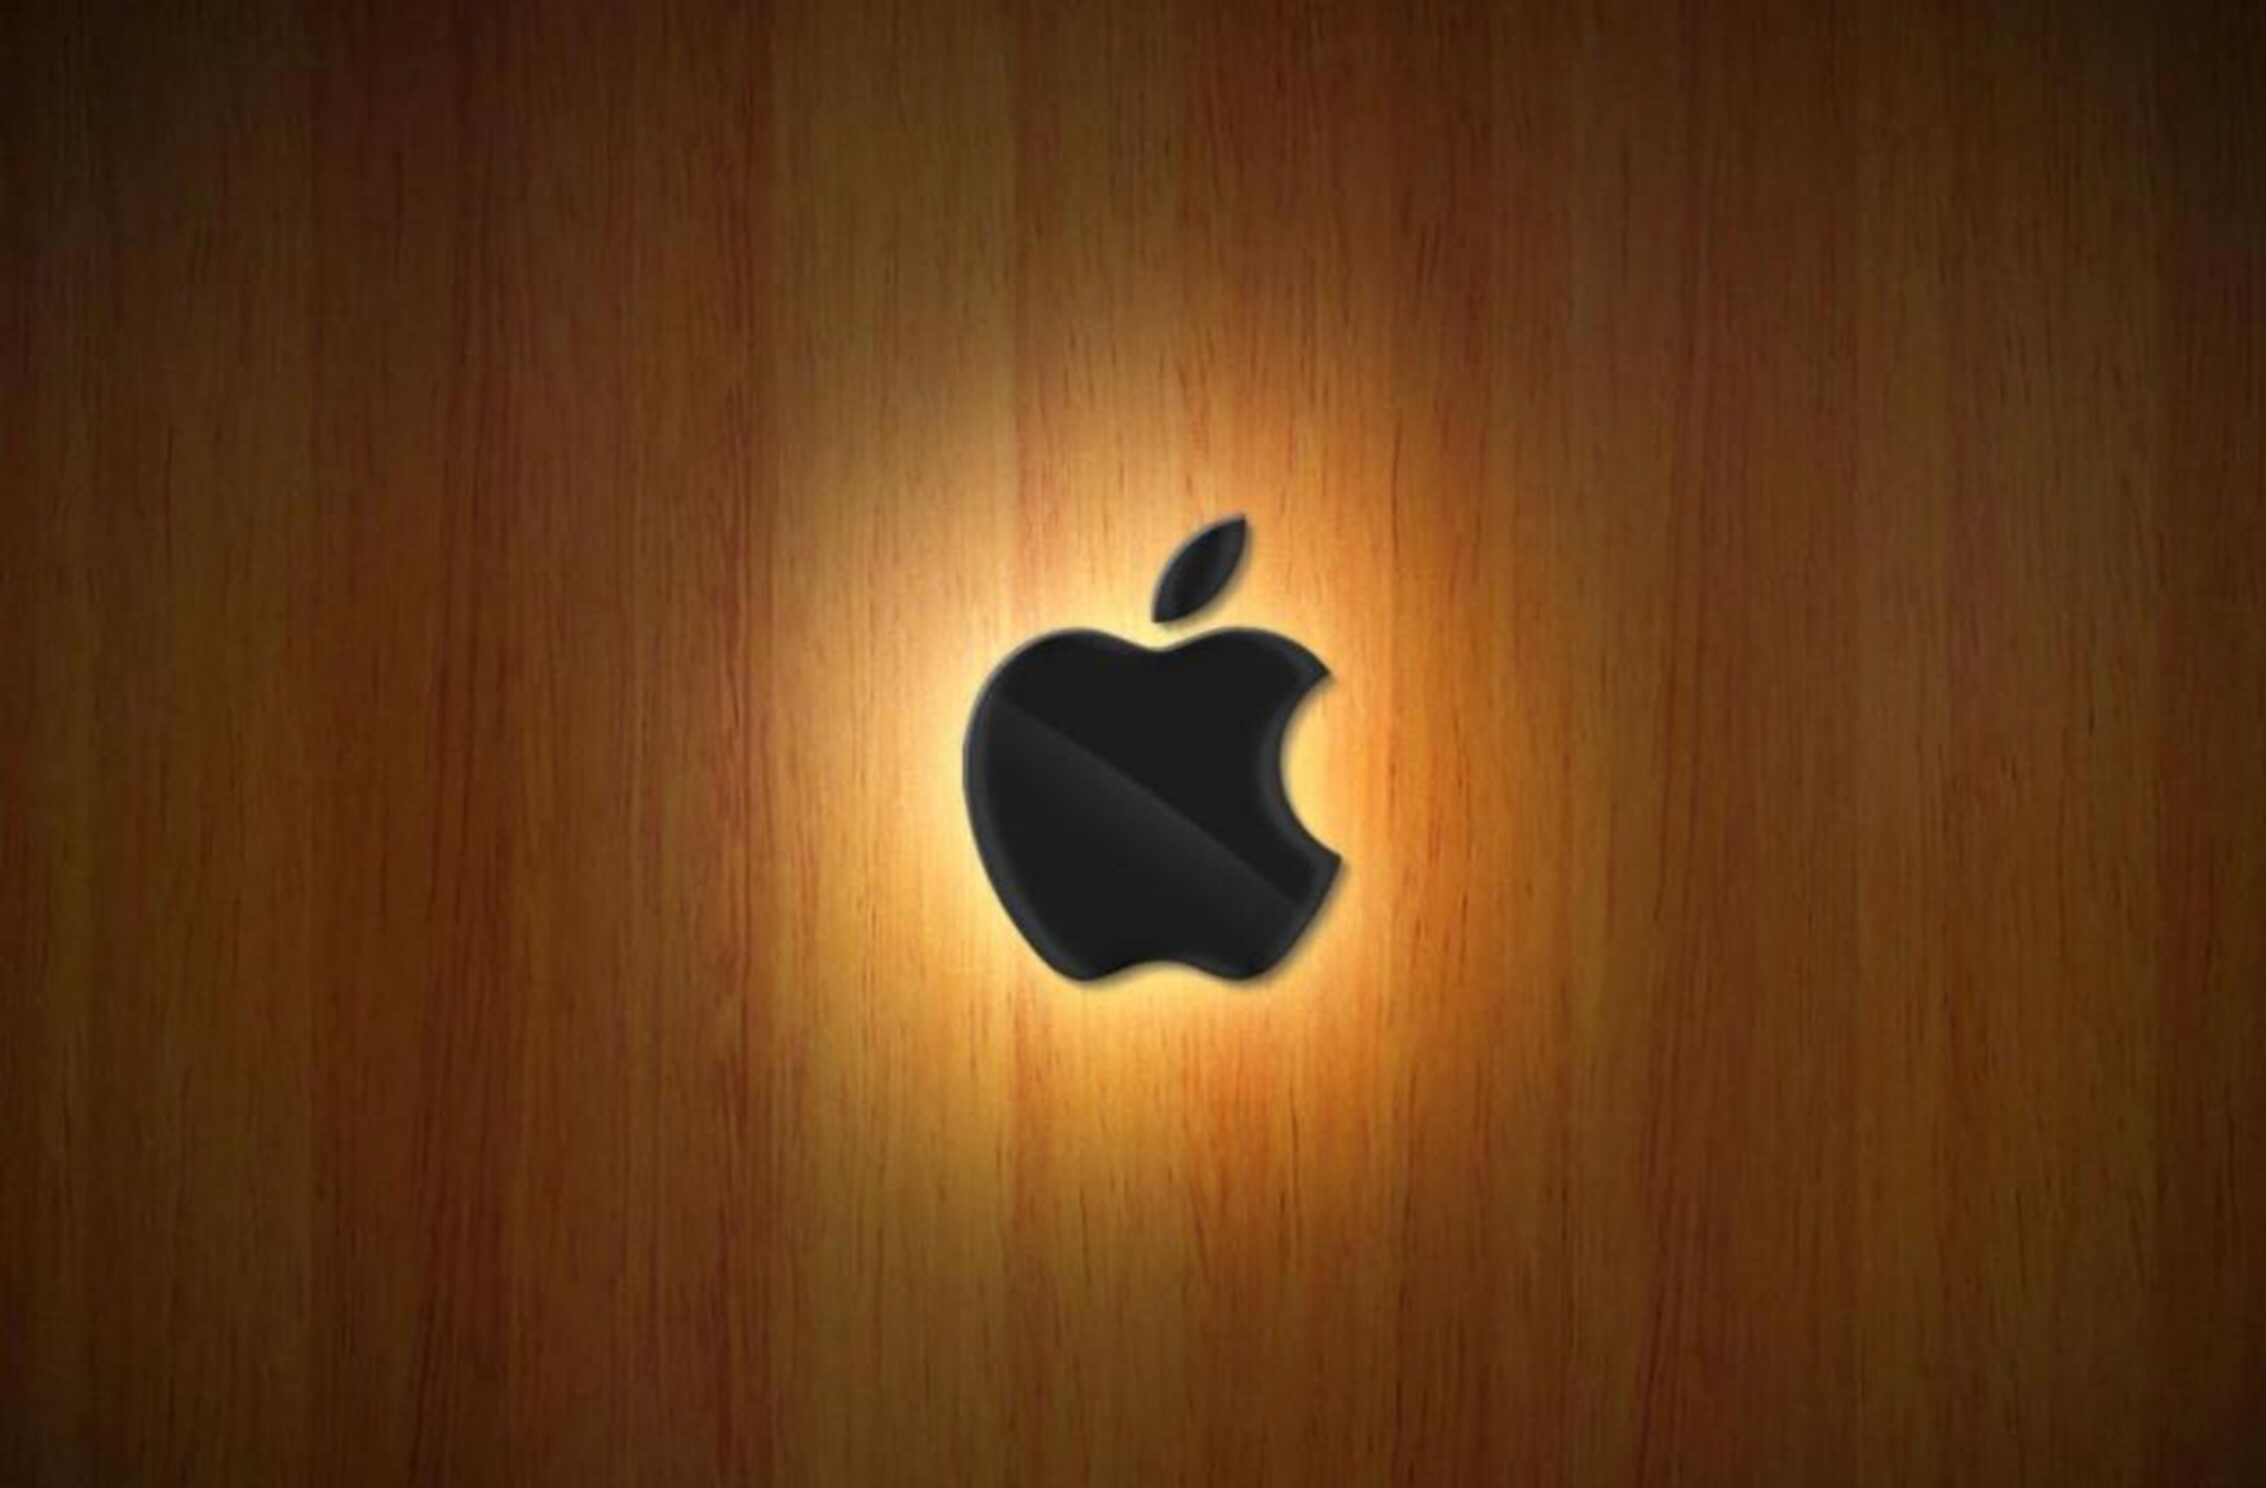 2266x1488 wallpaper Apple Logo Wood Ipad Wallpaper 2266x1488 pixels resolution